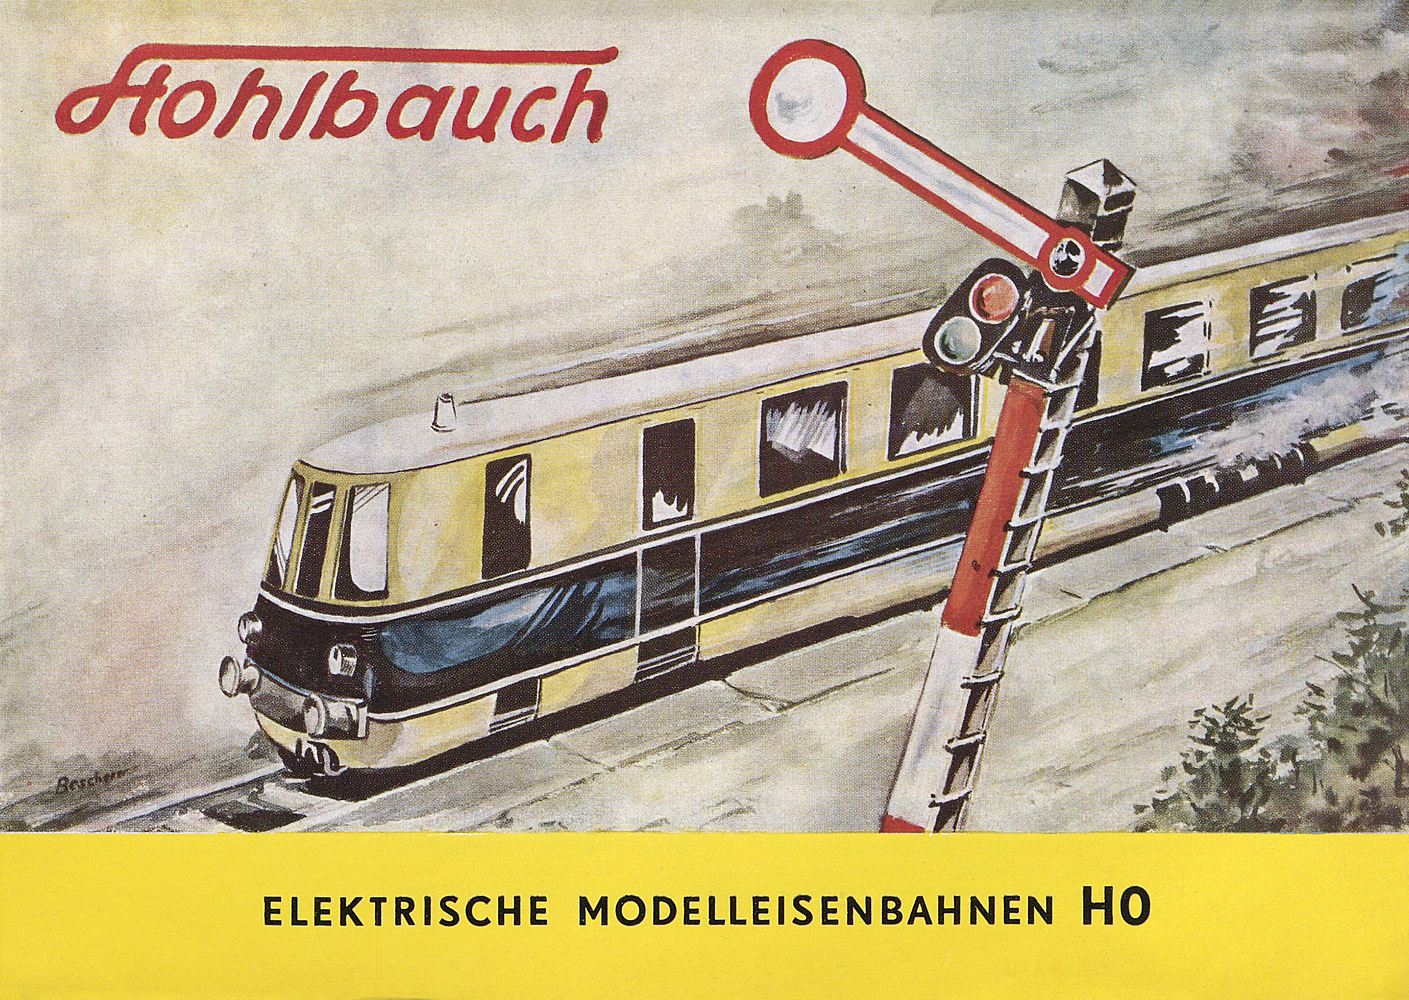 Albert Hohlbauch Katalog 1955